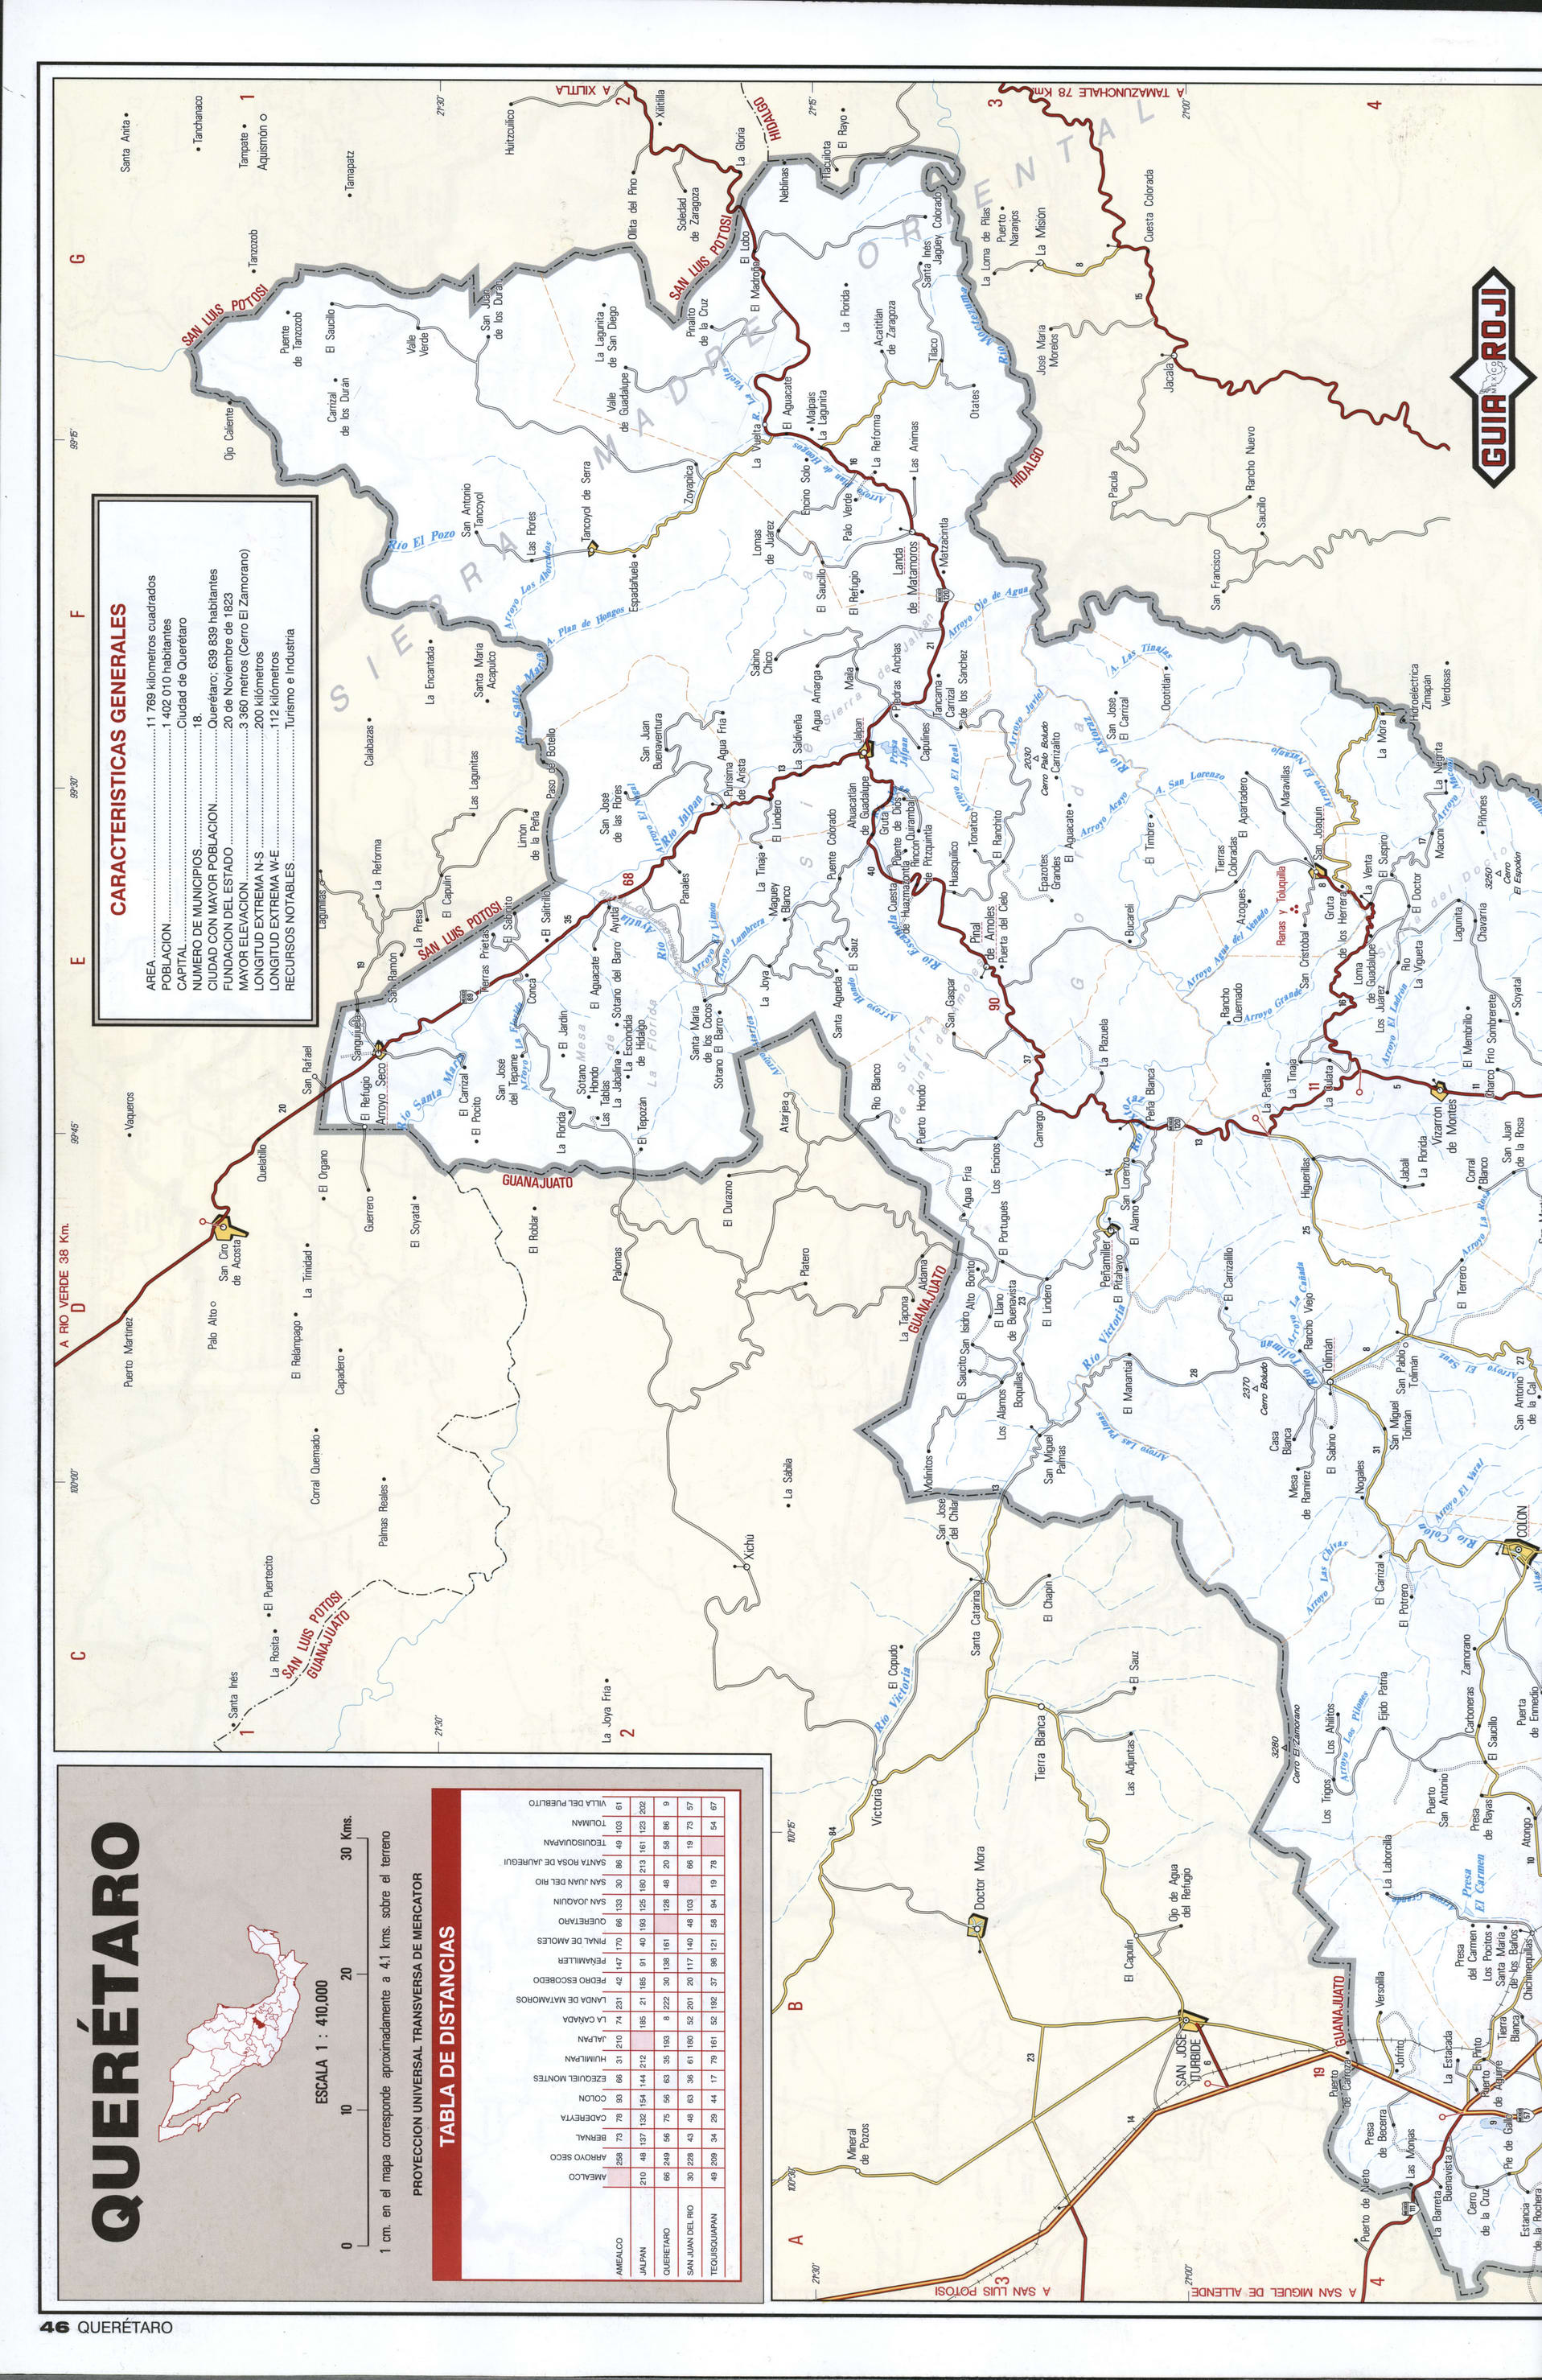 Queretaro state map northern